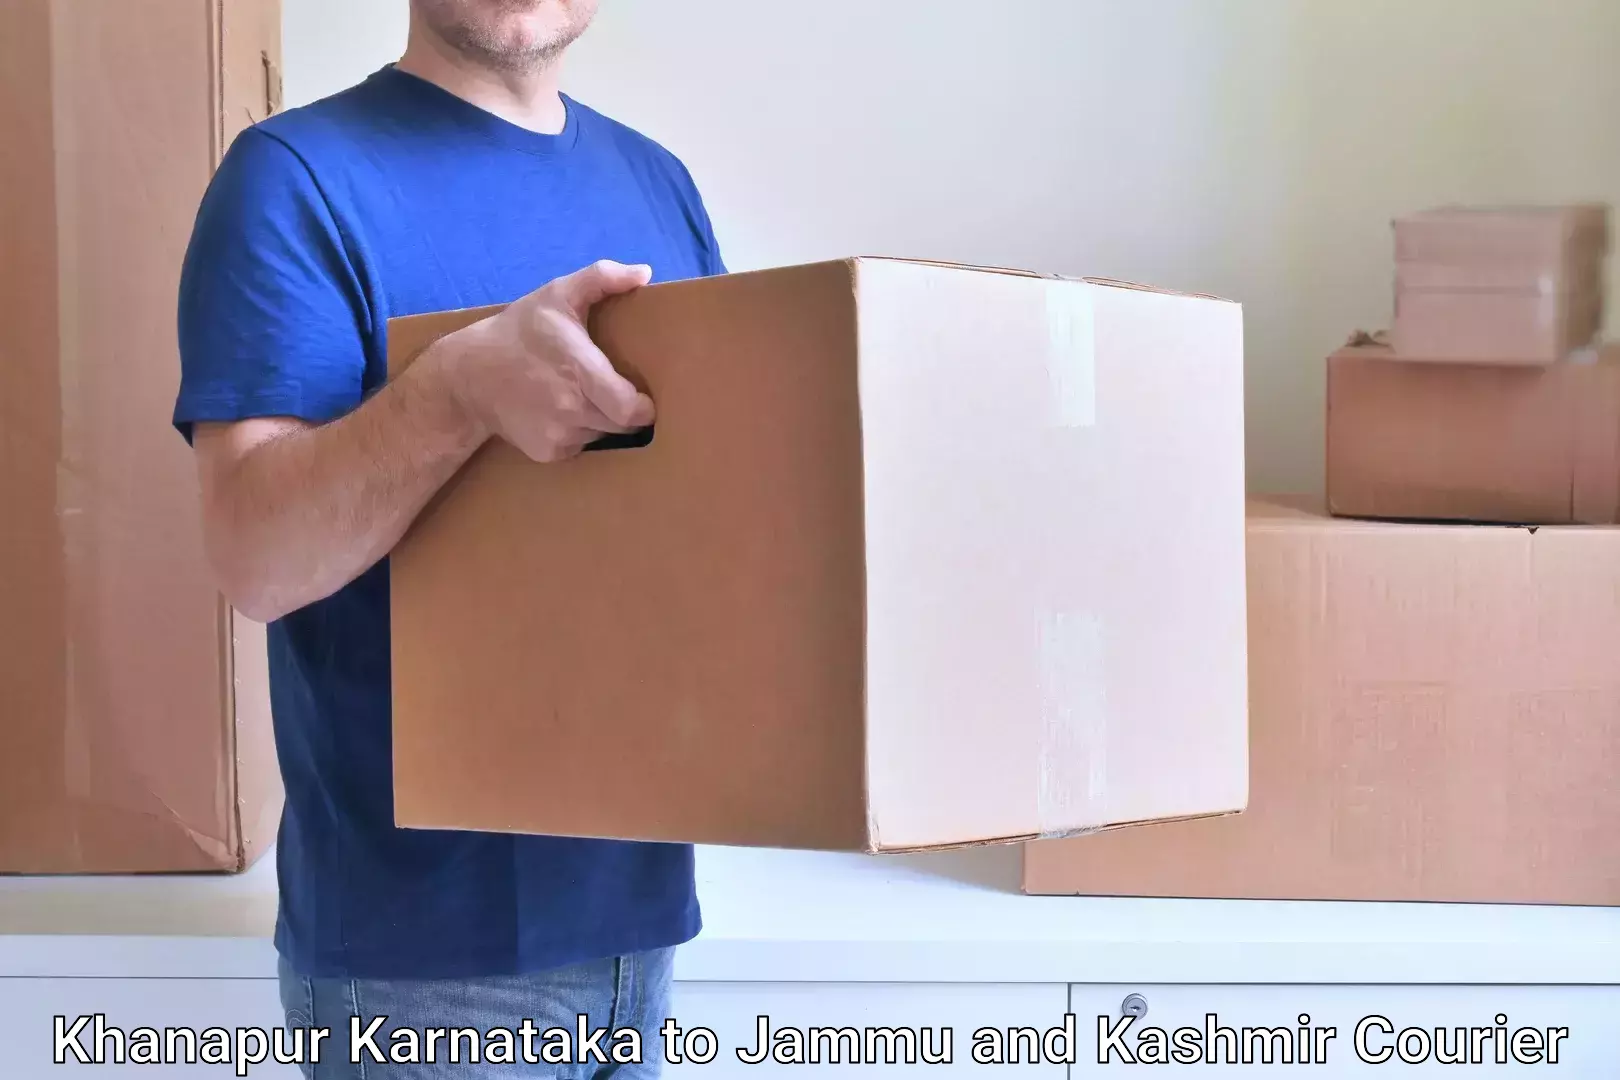 Courier service partnerships Khanapur Karnataka to Hiranagar